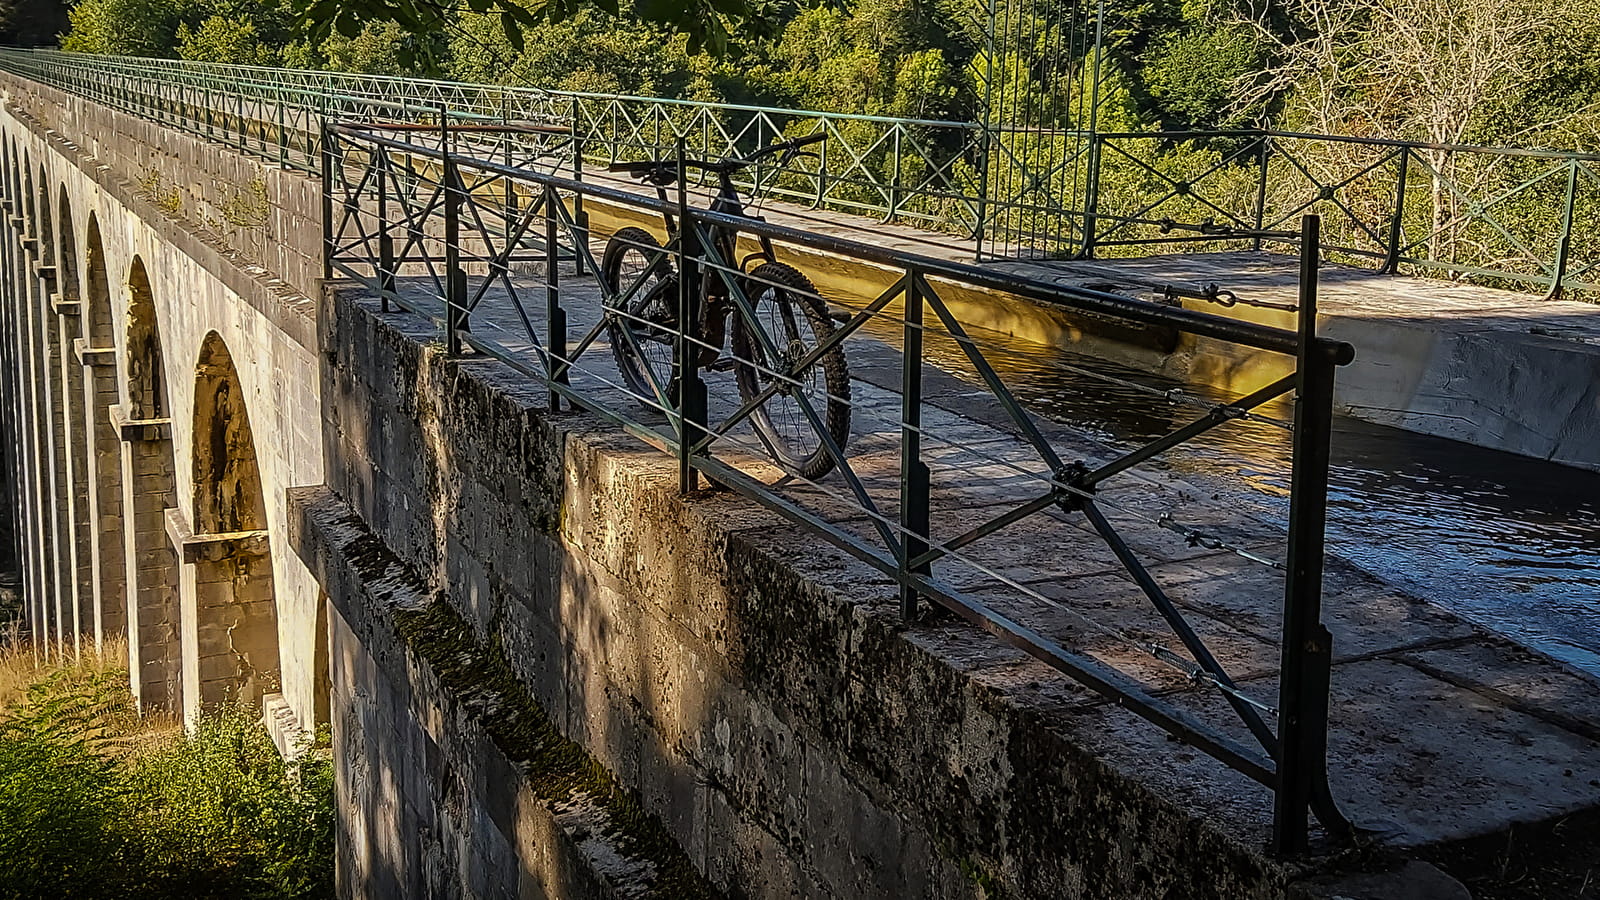 The Rigole d'Yonne - The aqueduct circuit